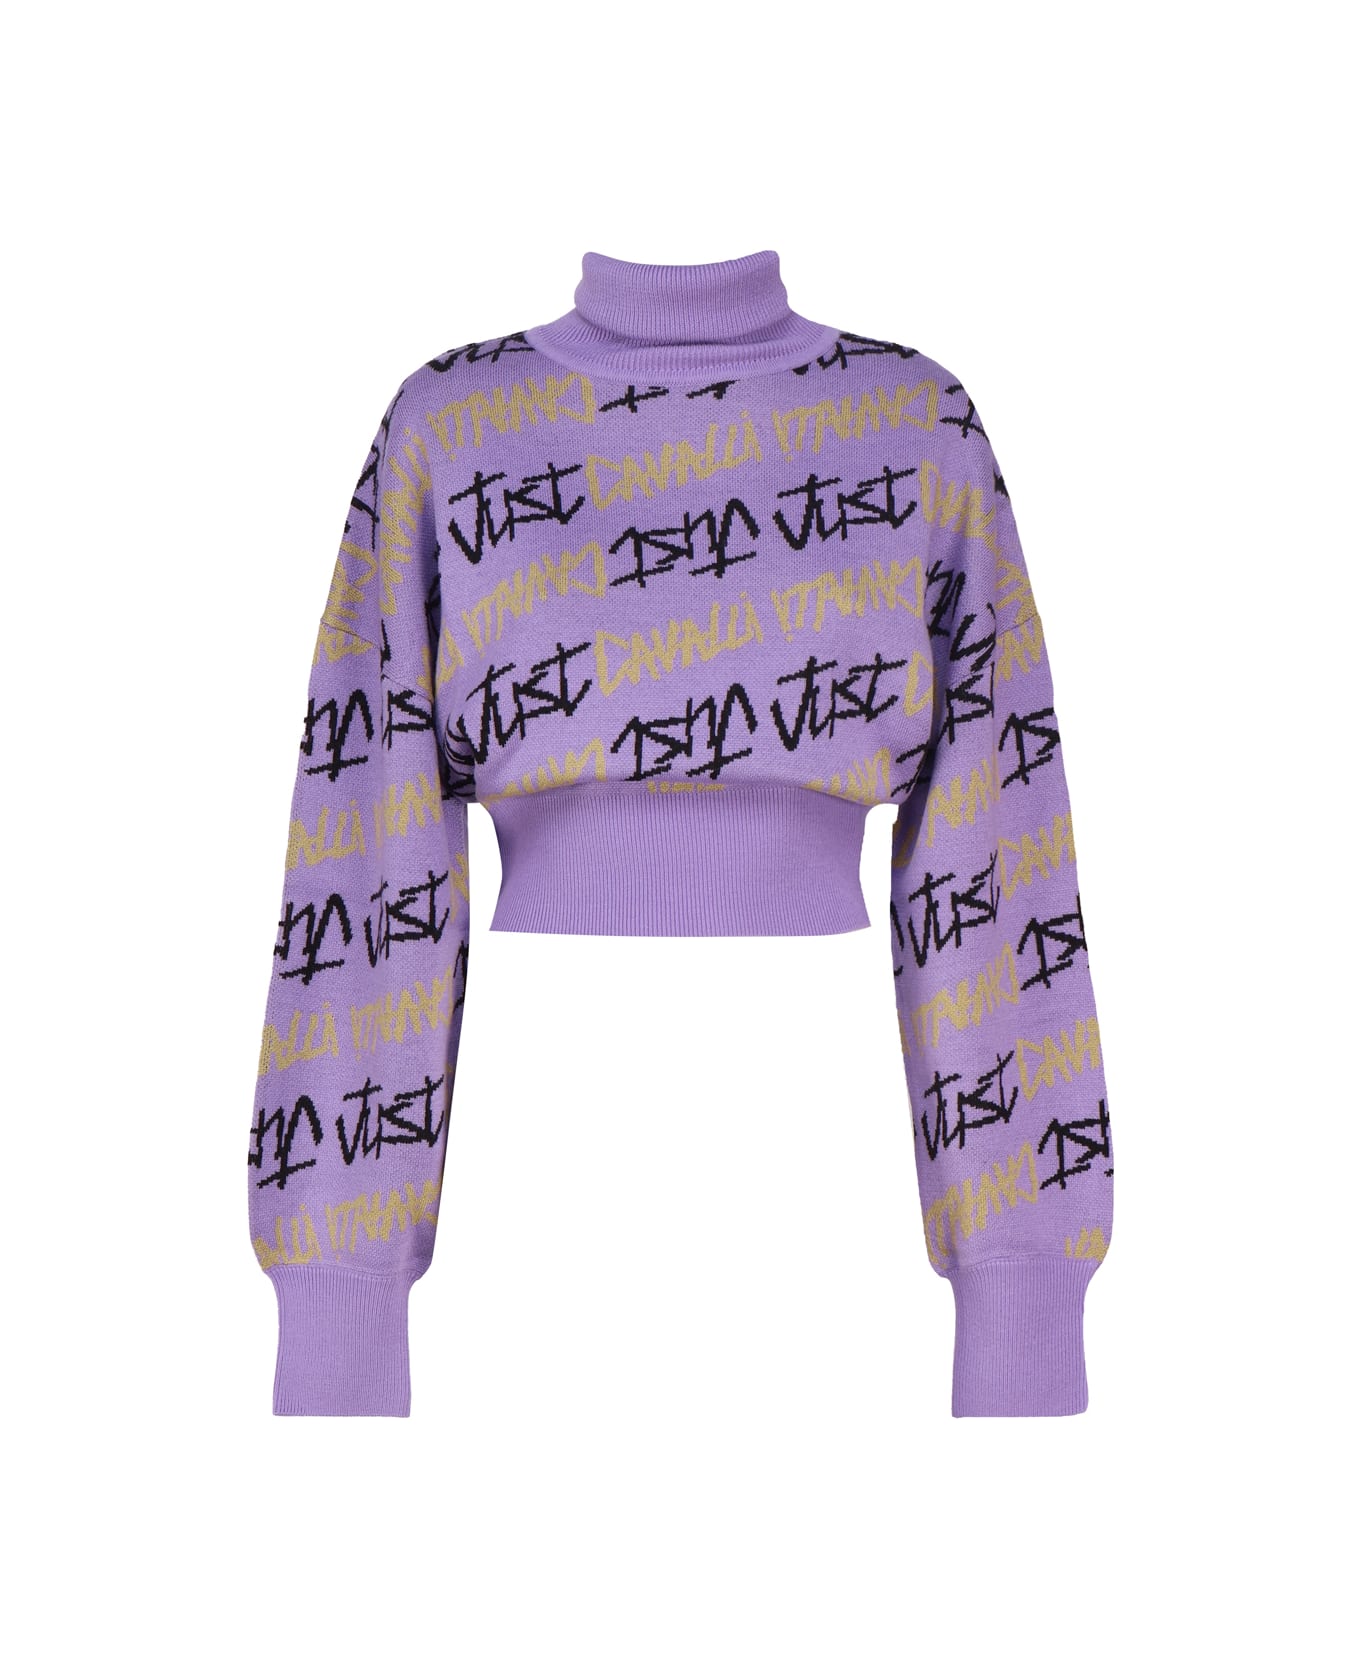 Just Cavalli Cropped Turtleneck Sweater - Violet tulip